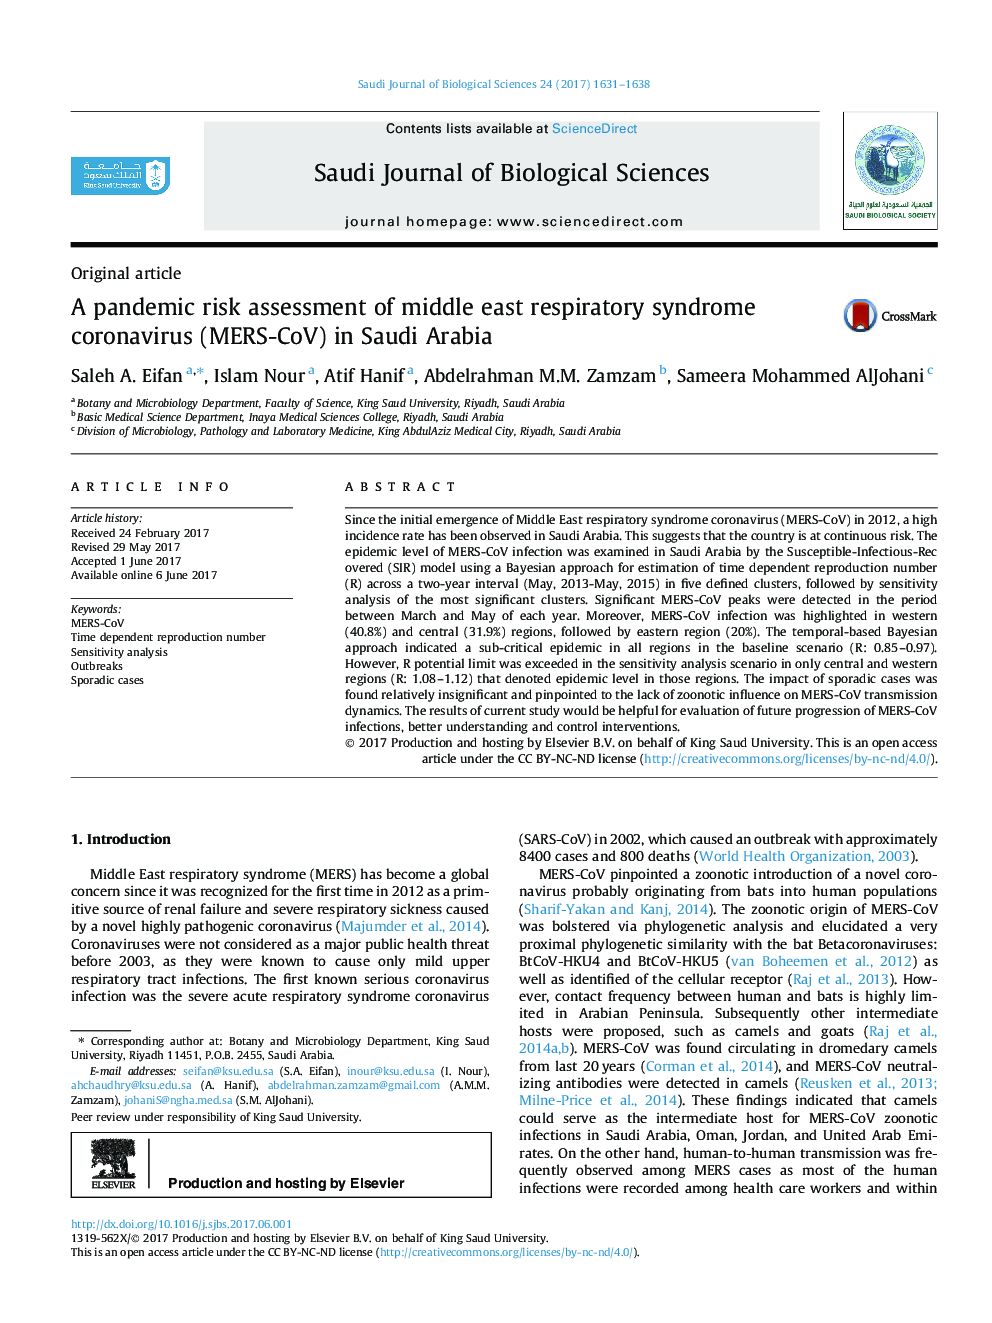 Original articleA pandemic risk assessment of middle east respiratory syndrome coronavirus (MERS-CoV) in Saudi Arabia